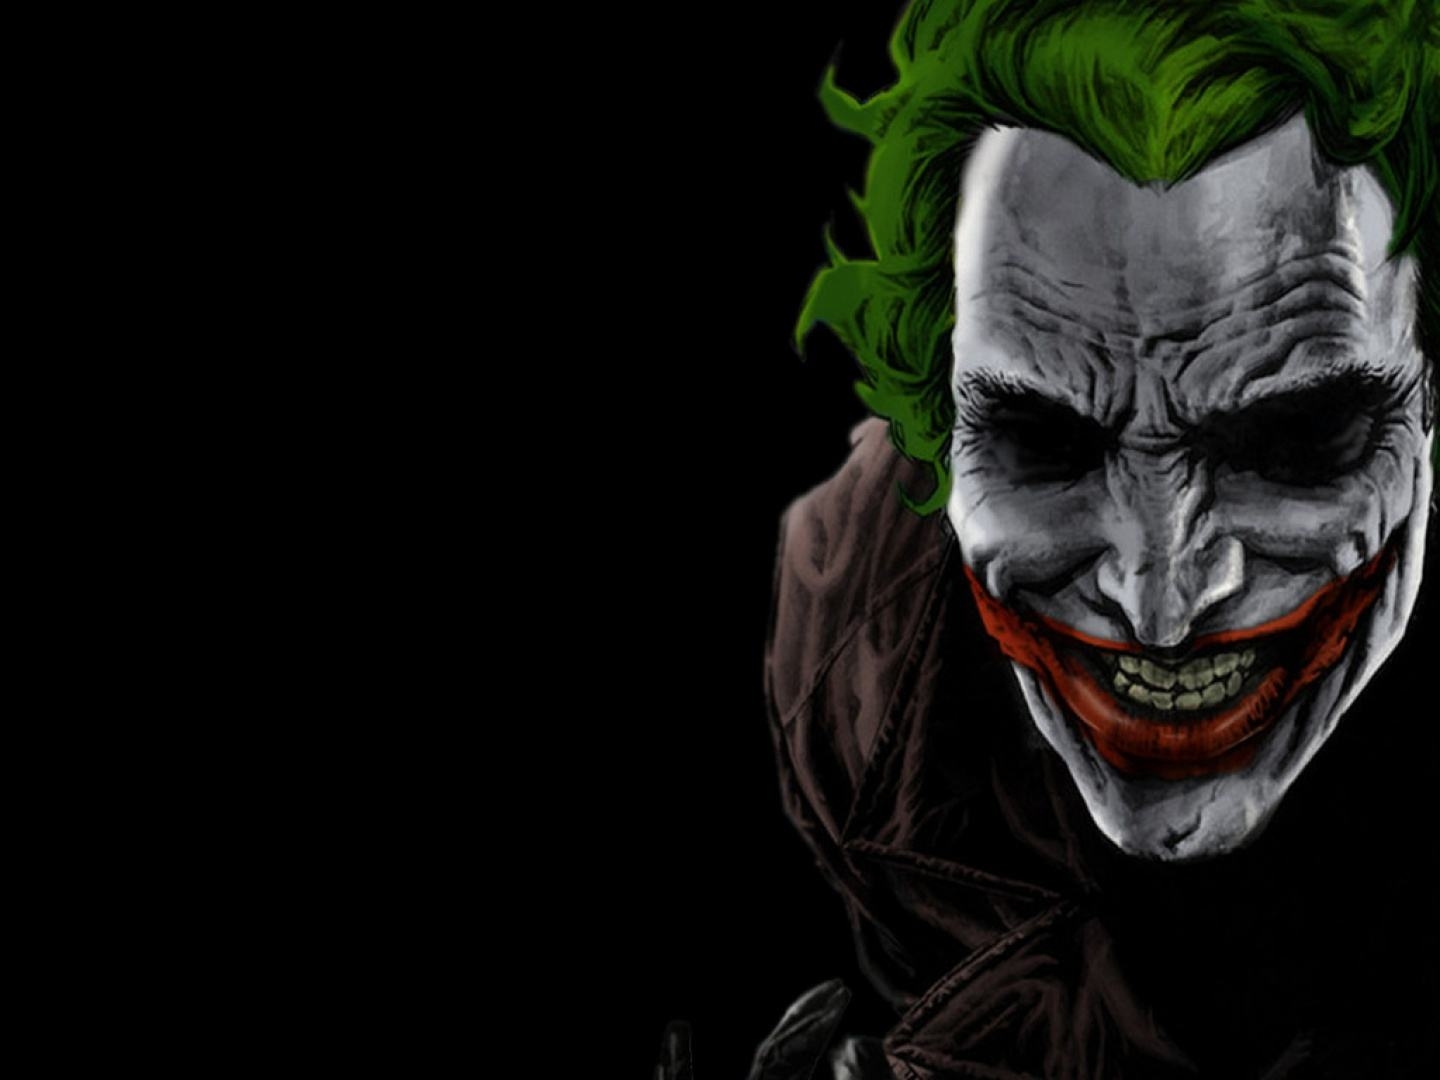  Backgrounds Wallpapers Joker Mis Imagenes Del Guason Batman Ngh Sick